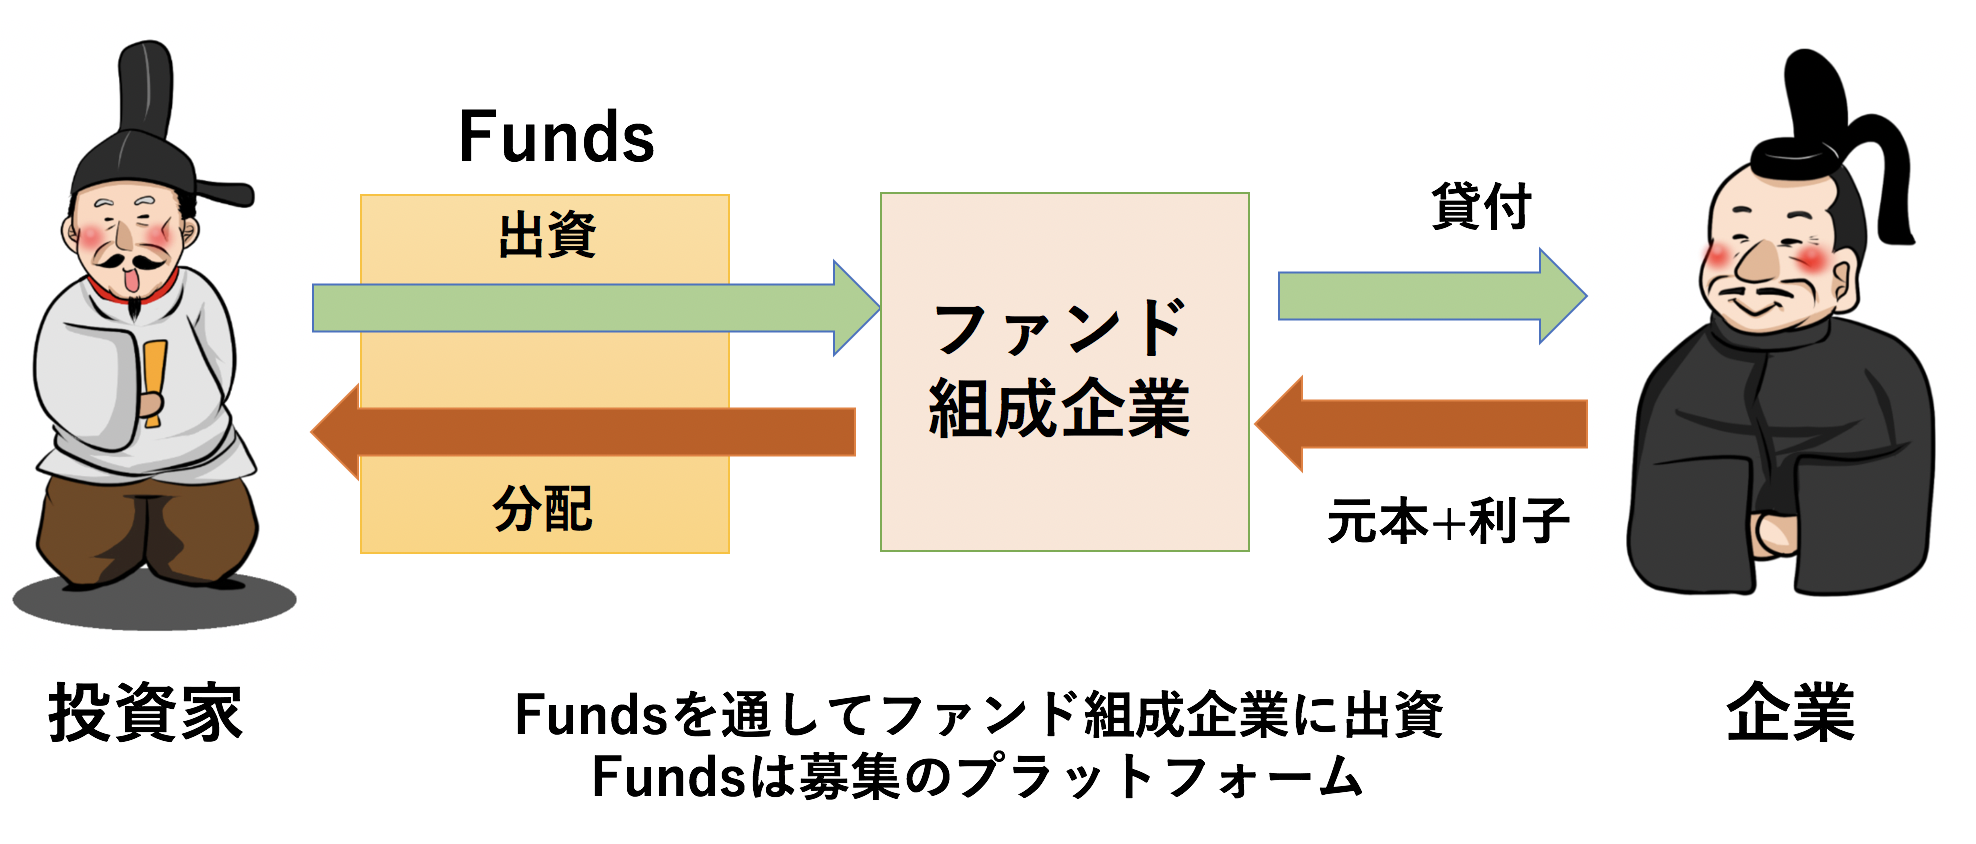 Funds(ファンズ)のスキーム